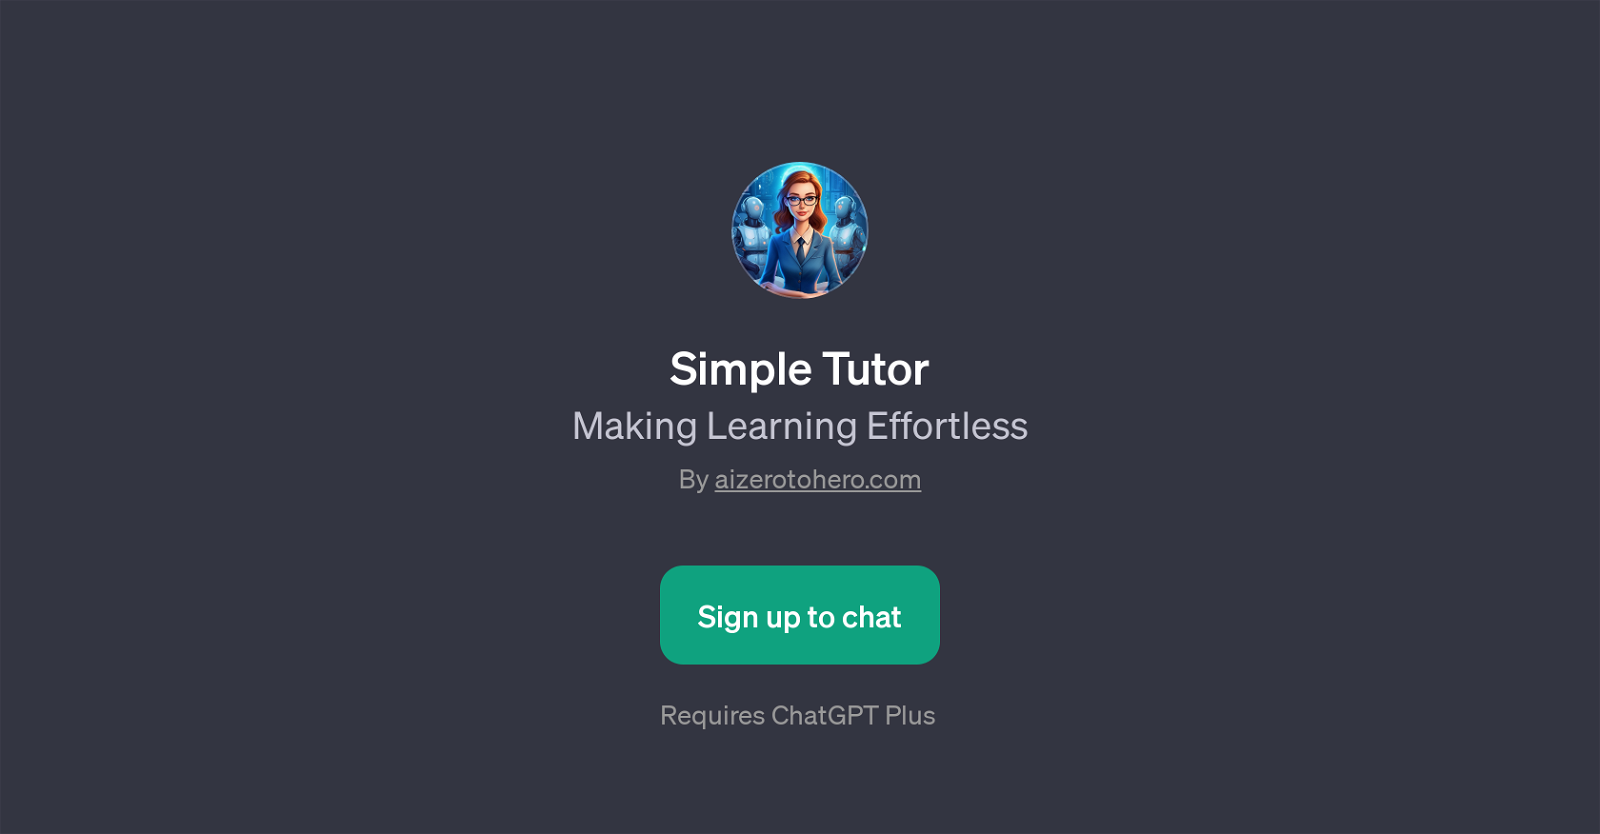 Simple Tutor website